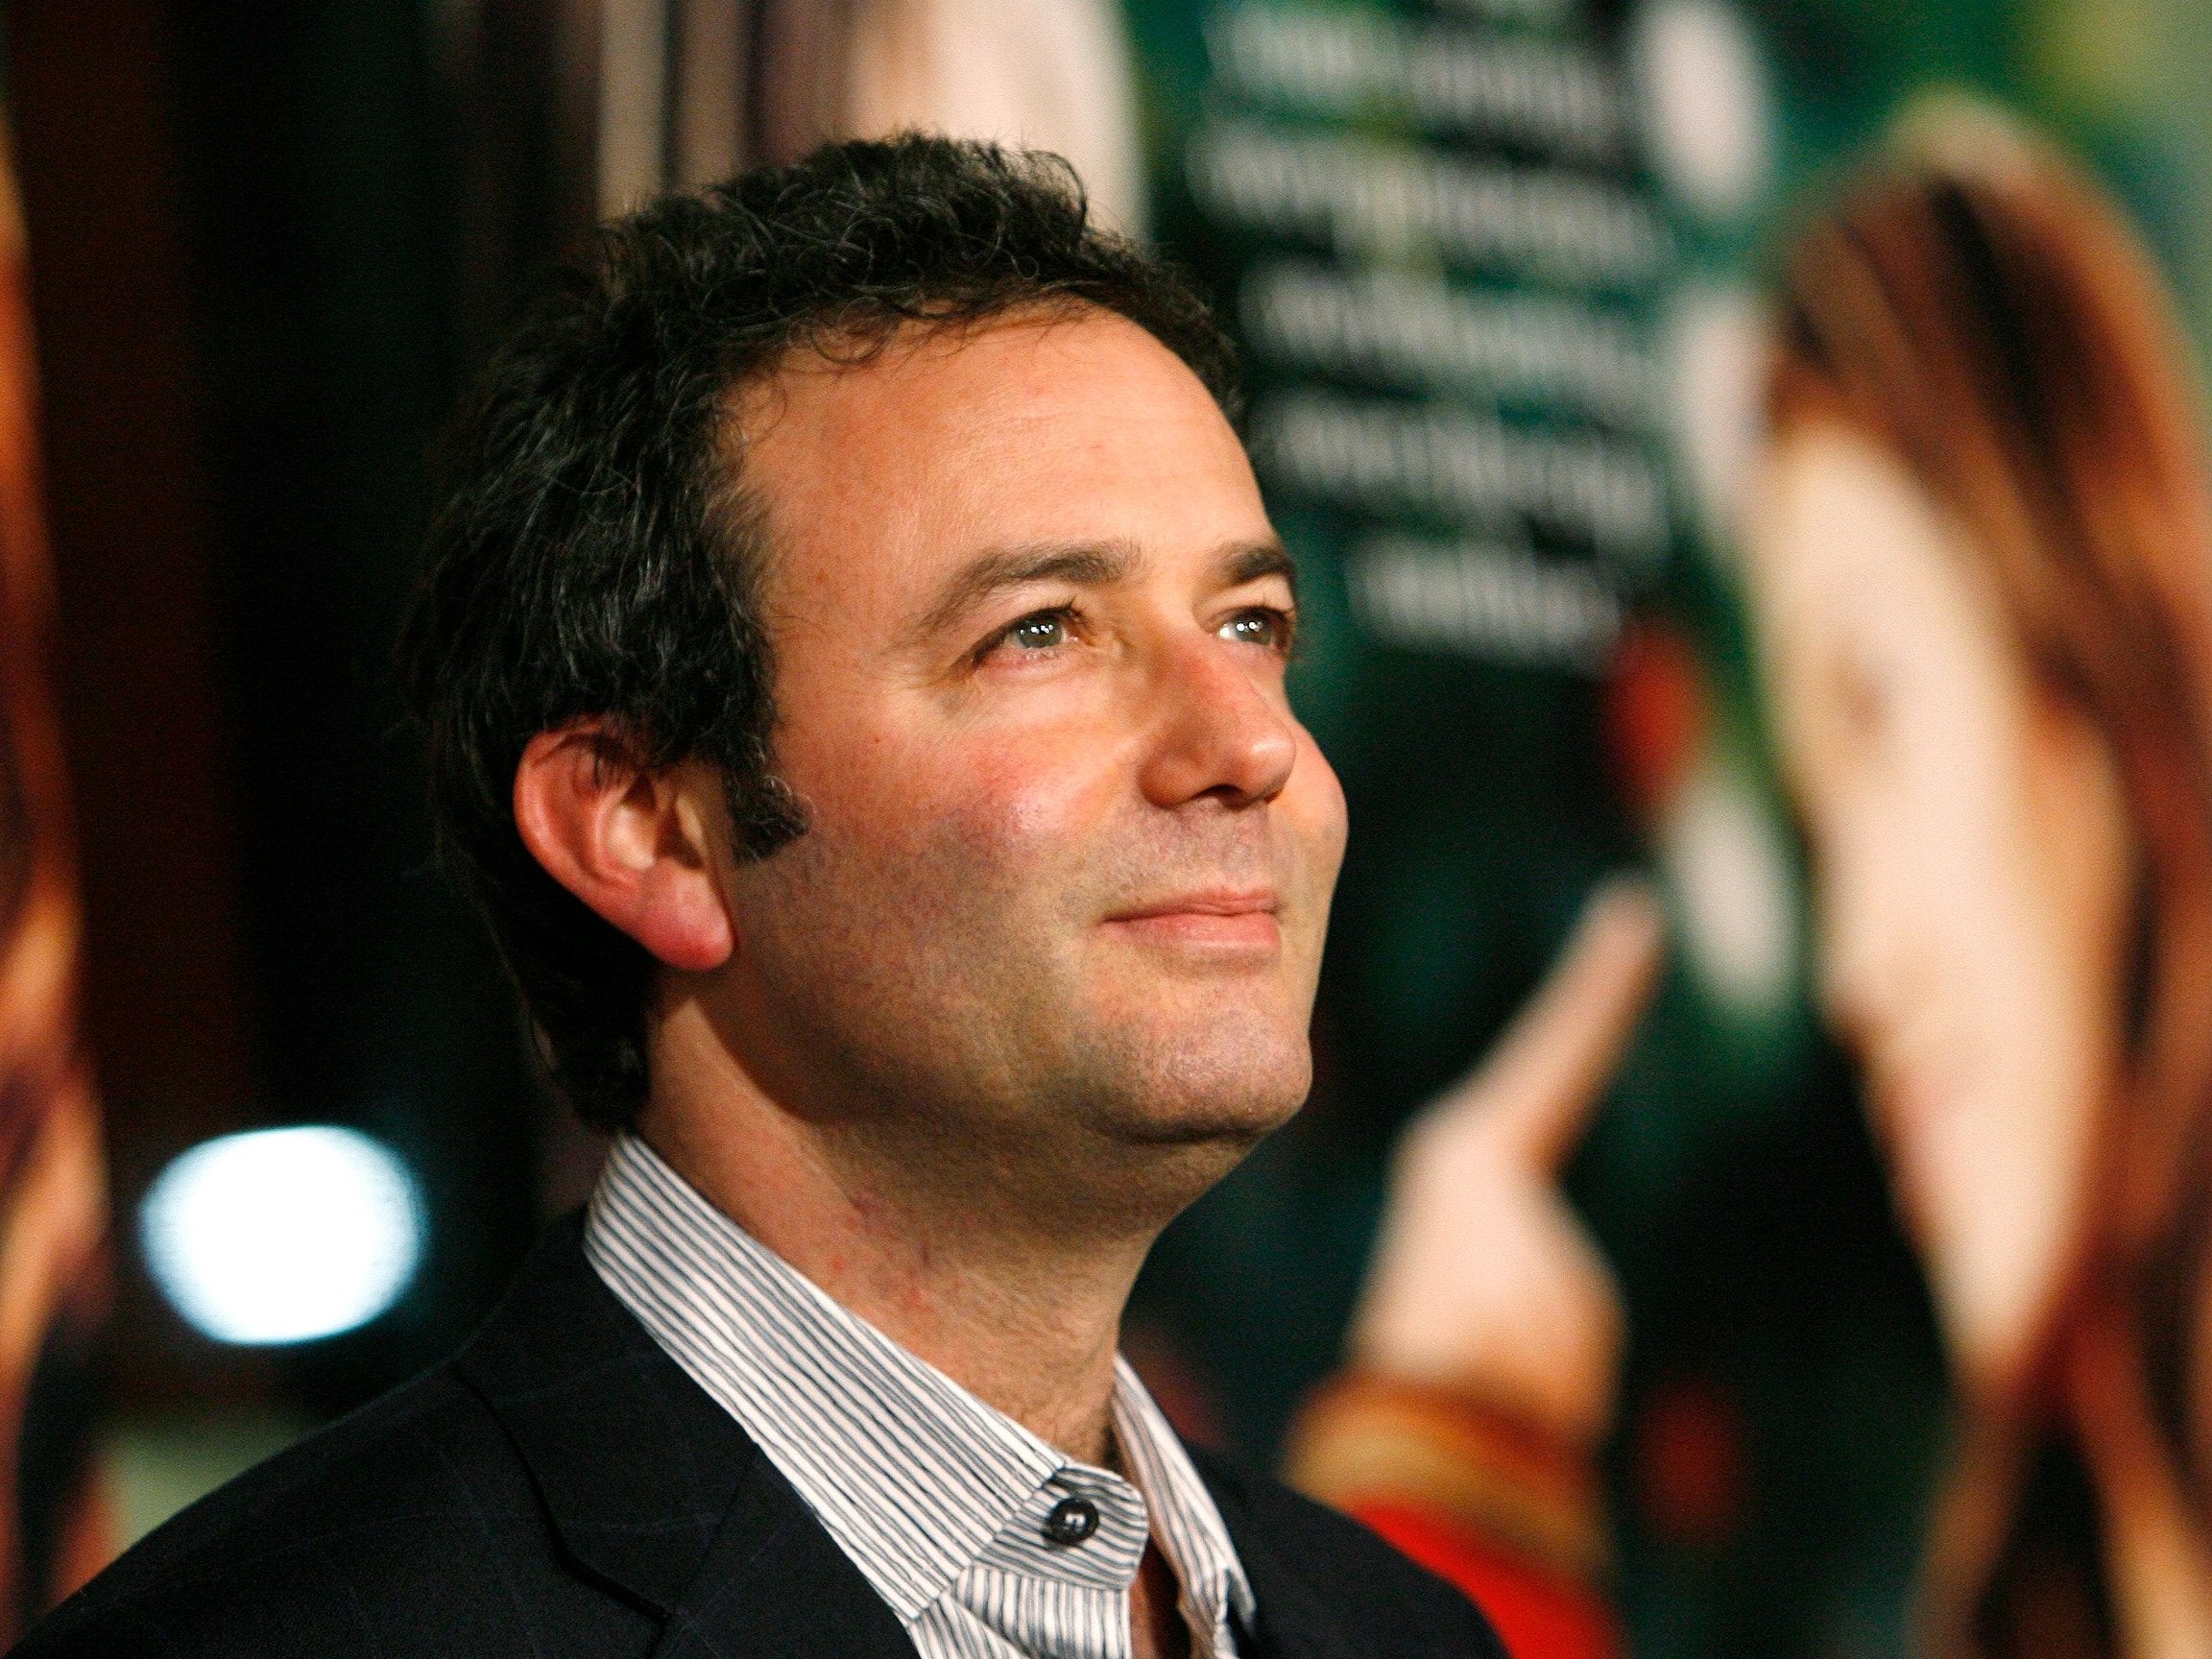 Director Michael Lehmann says critics misinterpreted ‘Heathers’